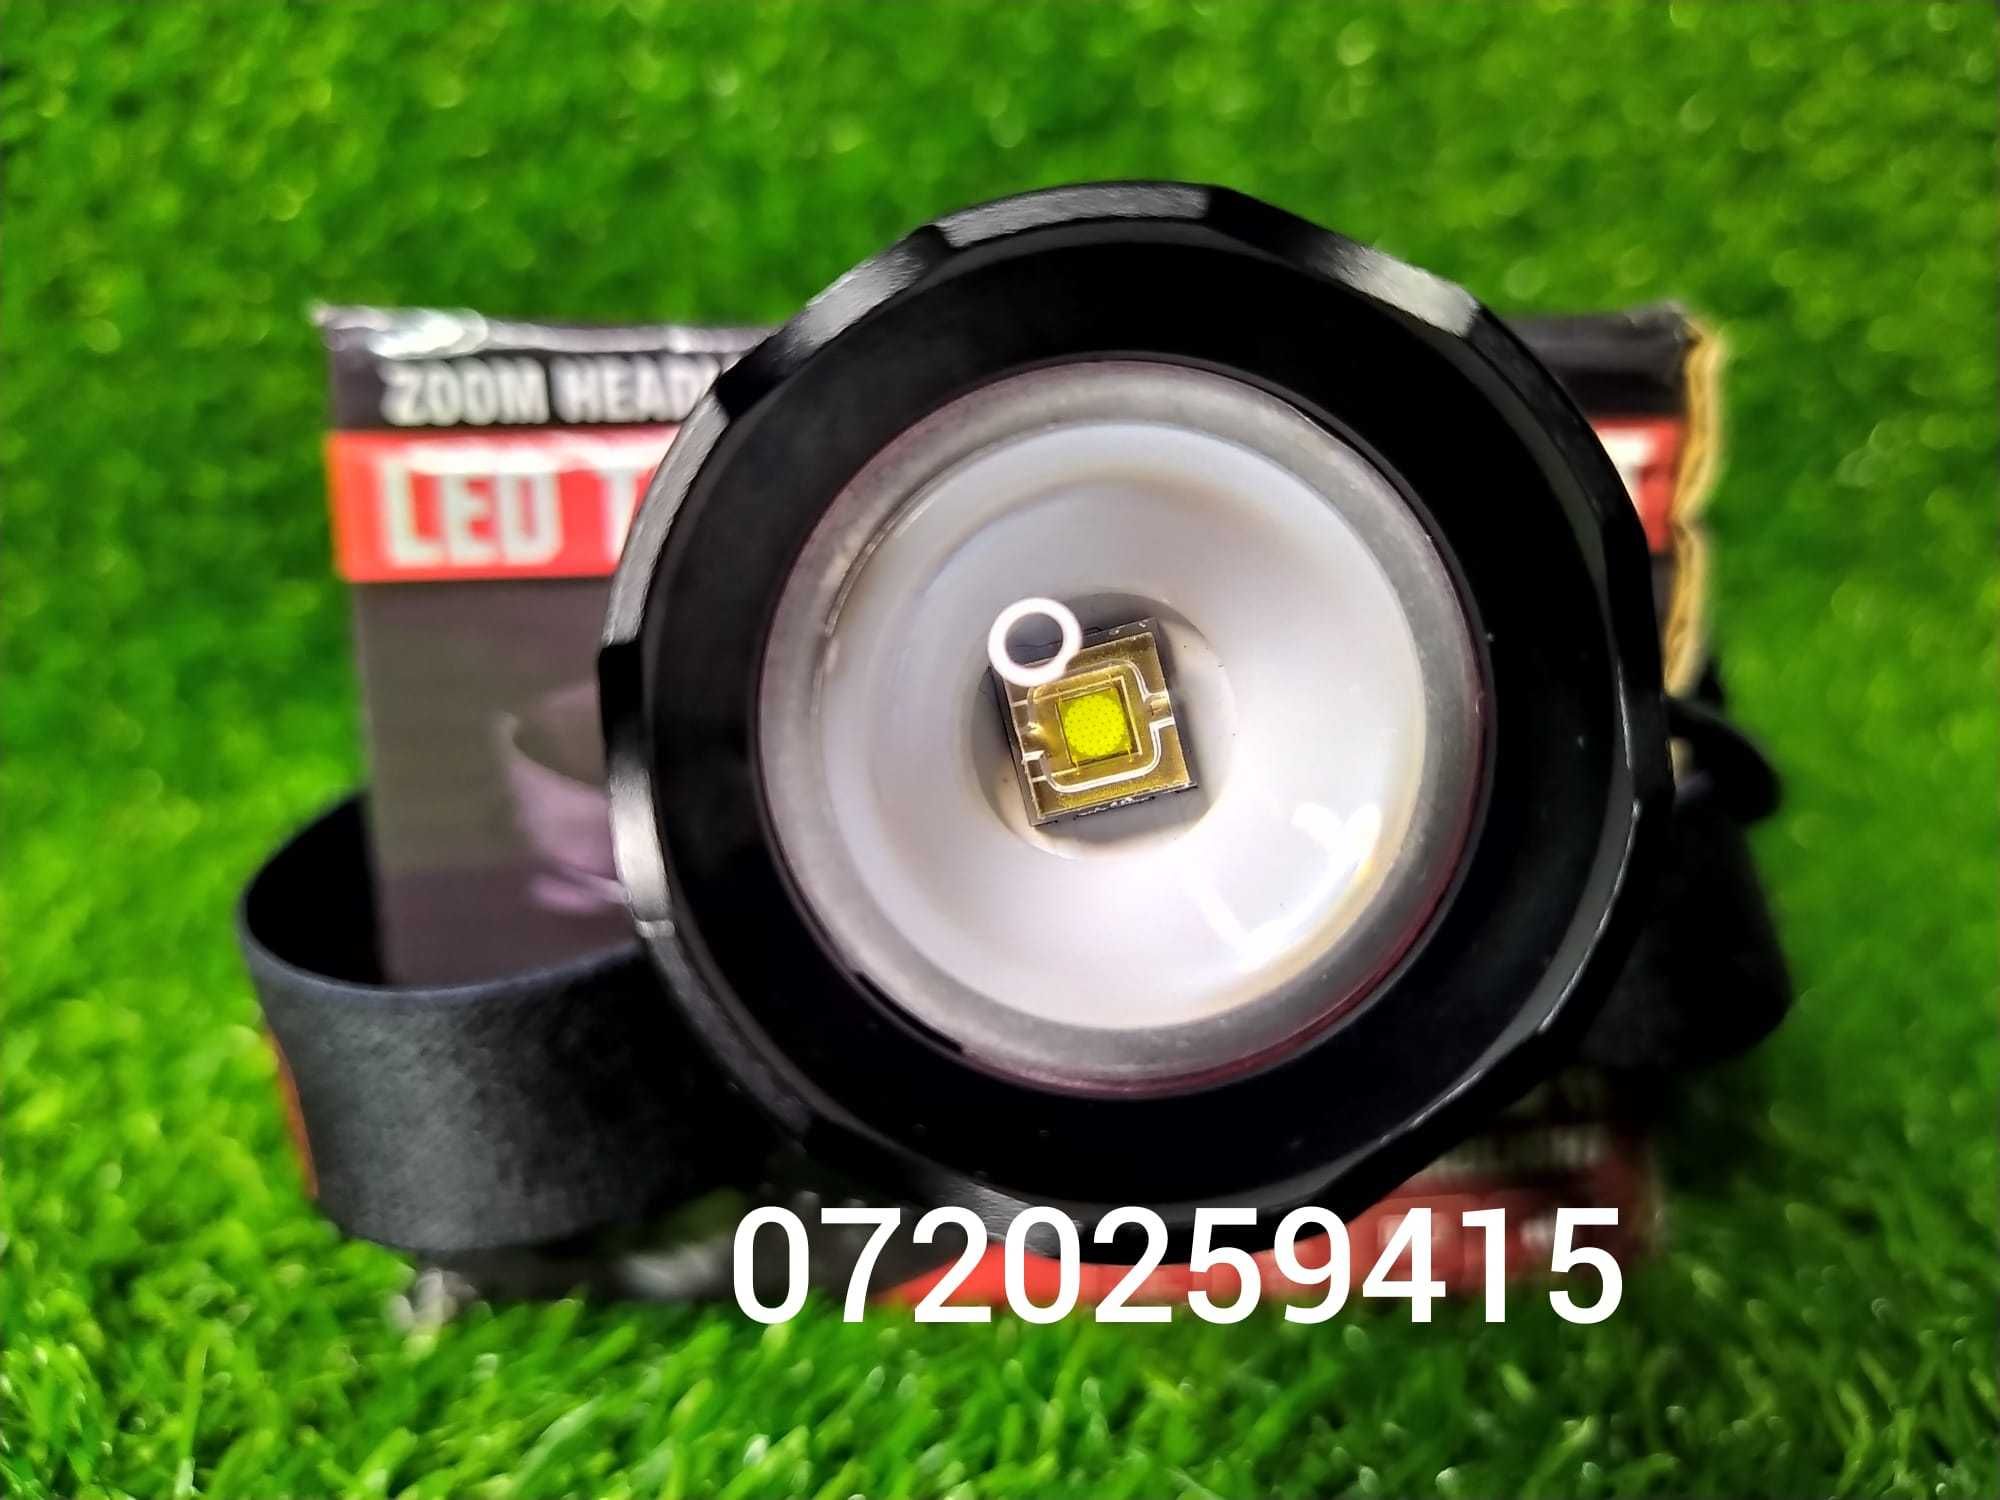 Lanterna Frontala Police cu Led Laser, ZOOM PM20 Pentru Distanta 1300M